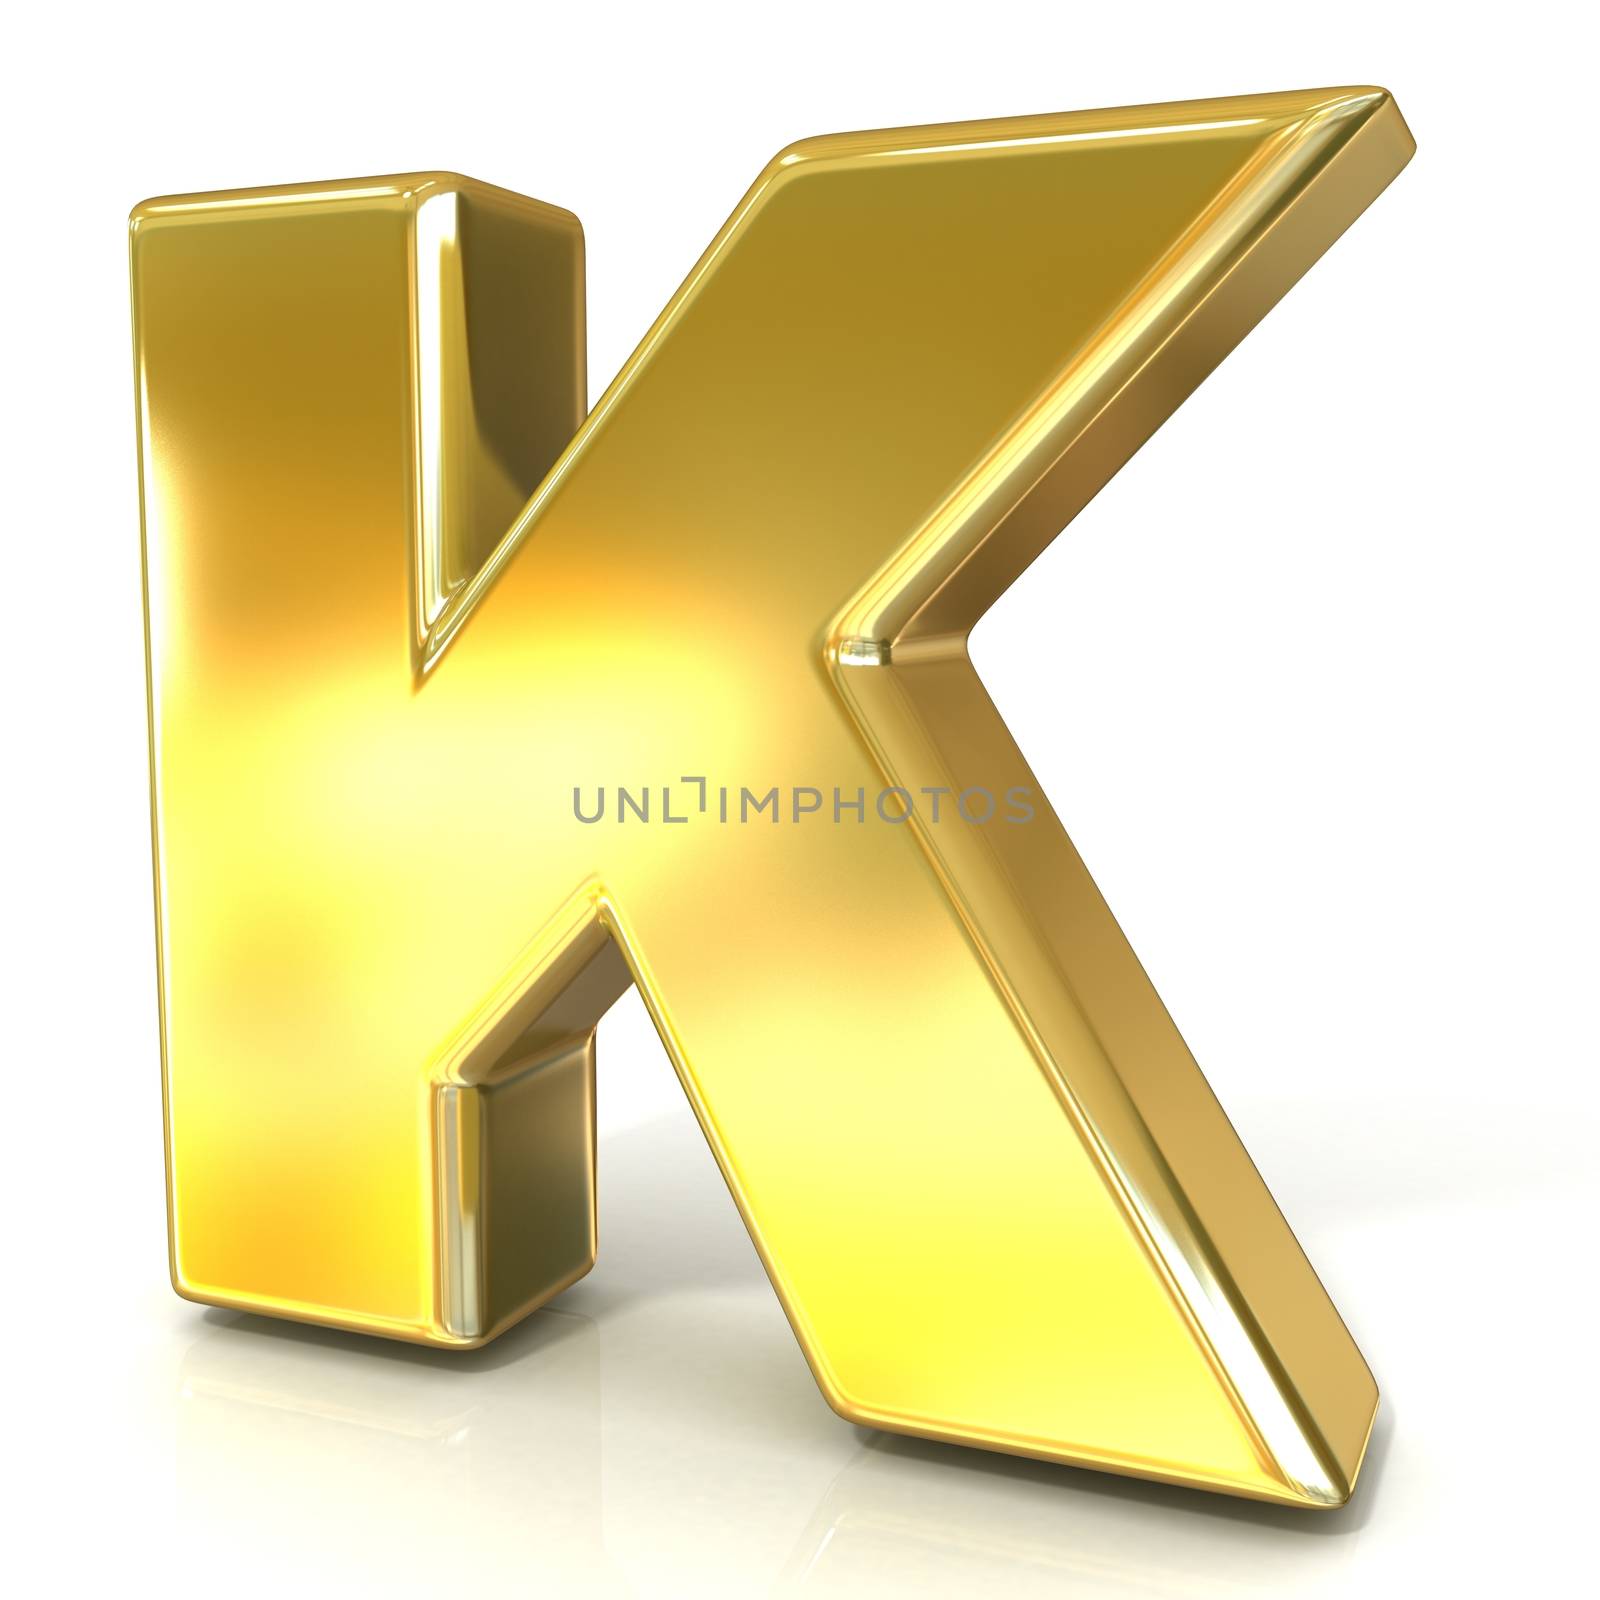 Golden font collection letter - K. 3D render illustration, isolated on white background.